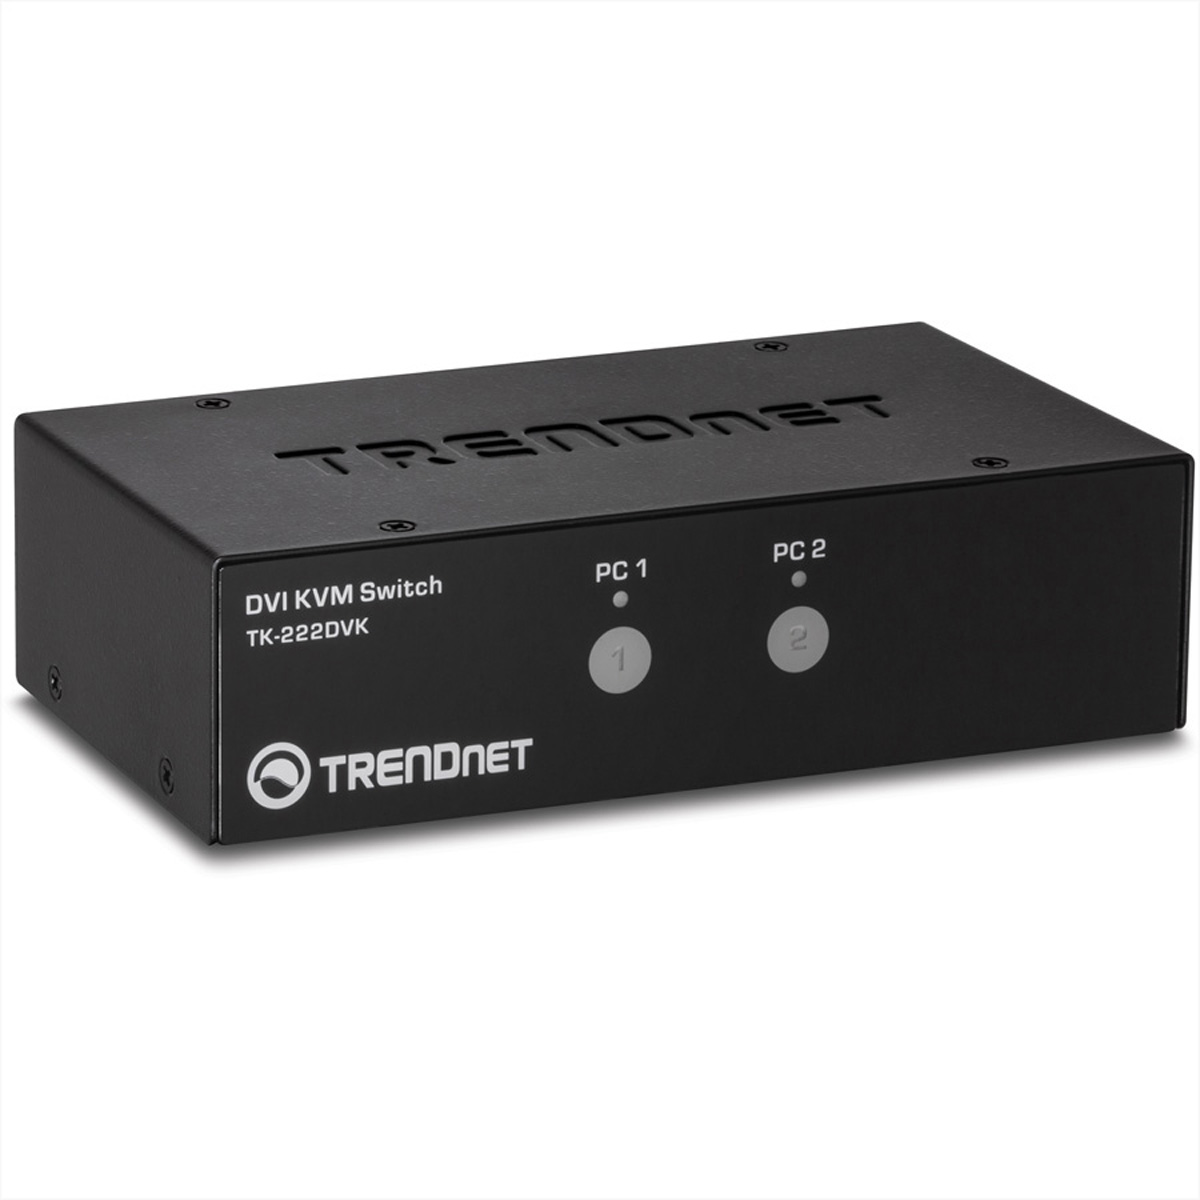 TRENDNET Switch TK-222DVK Kit 2-port KVM (KVM)-Switches Tastatur/Video/Maus DVI